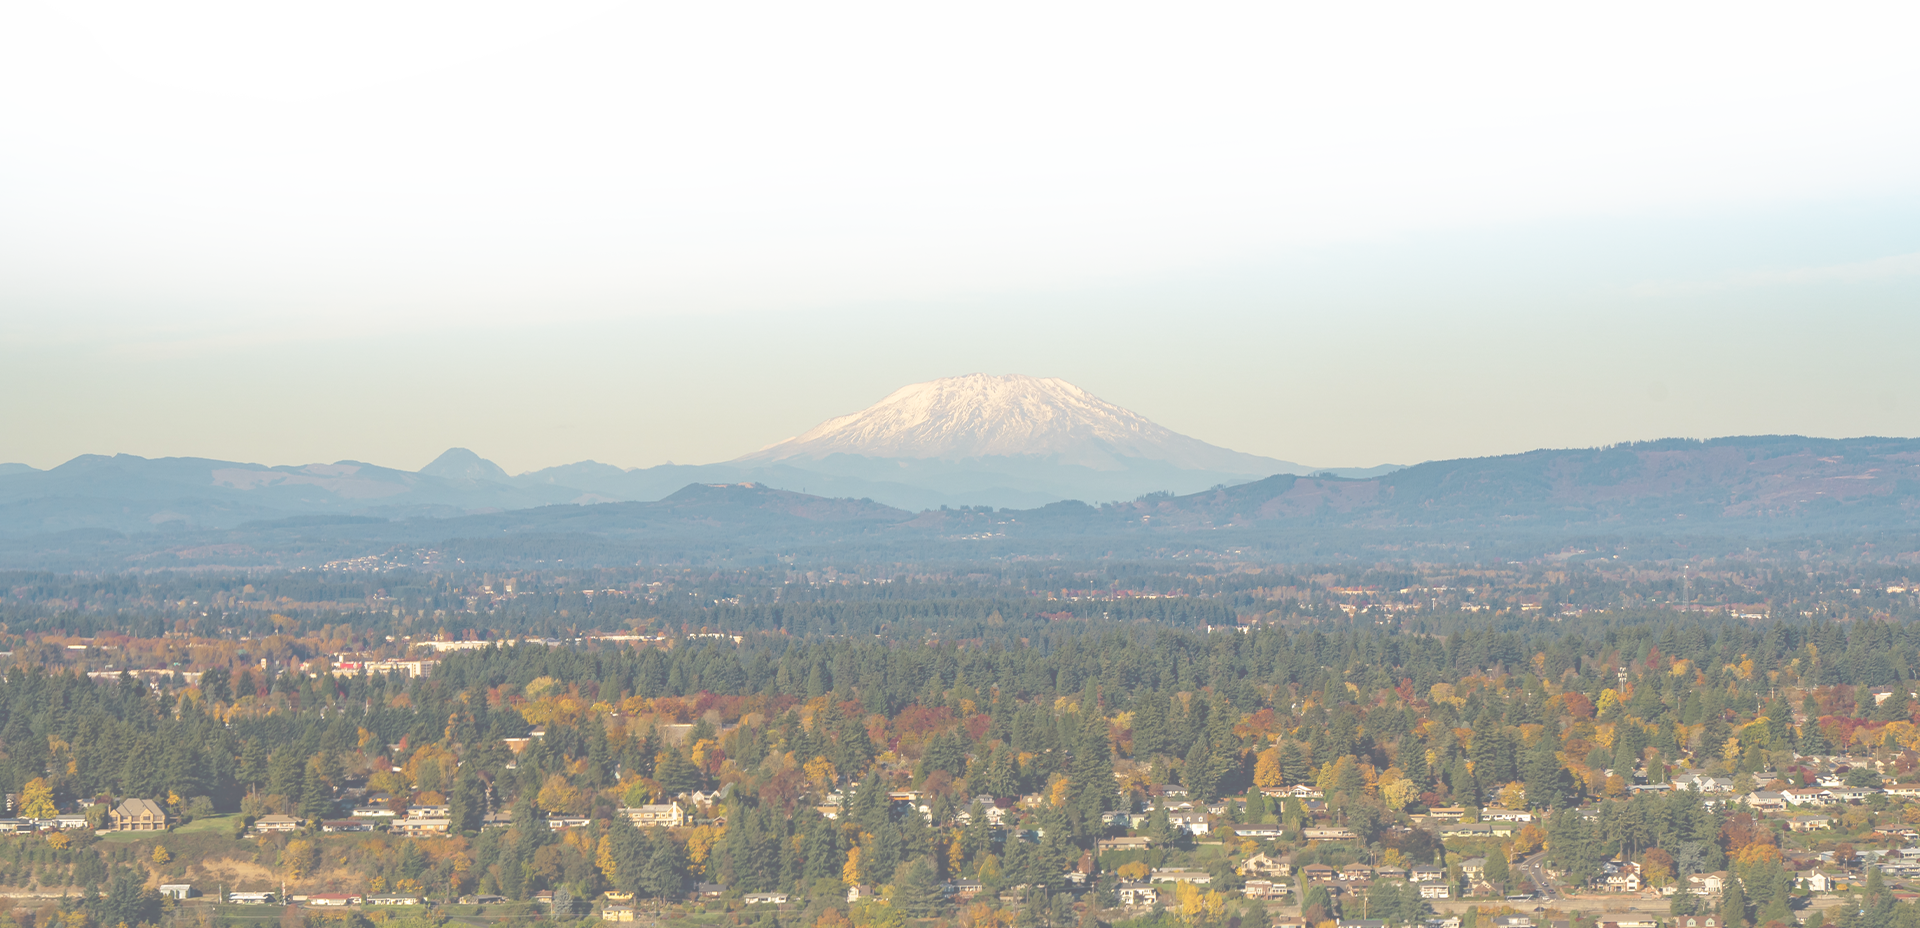 A landscape image of Vancouver, Washington